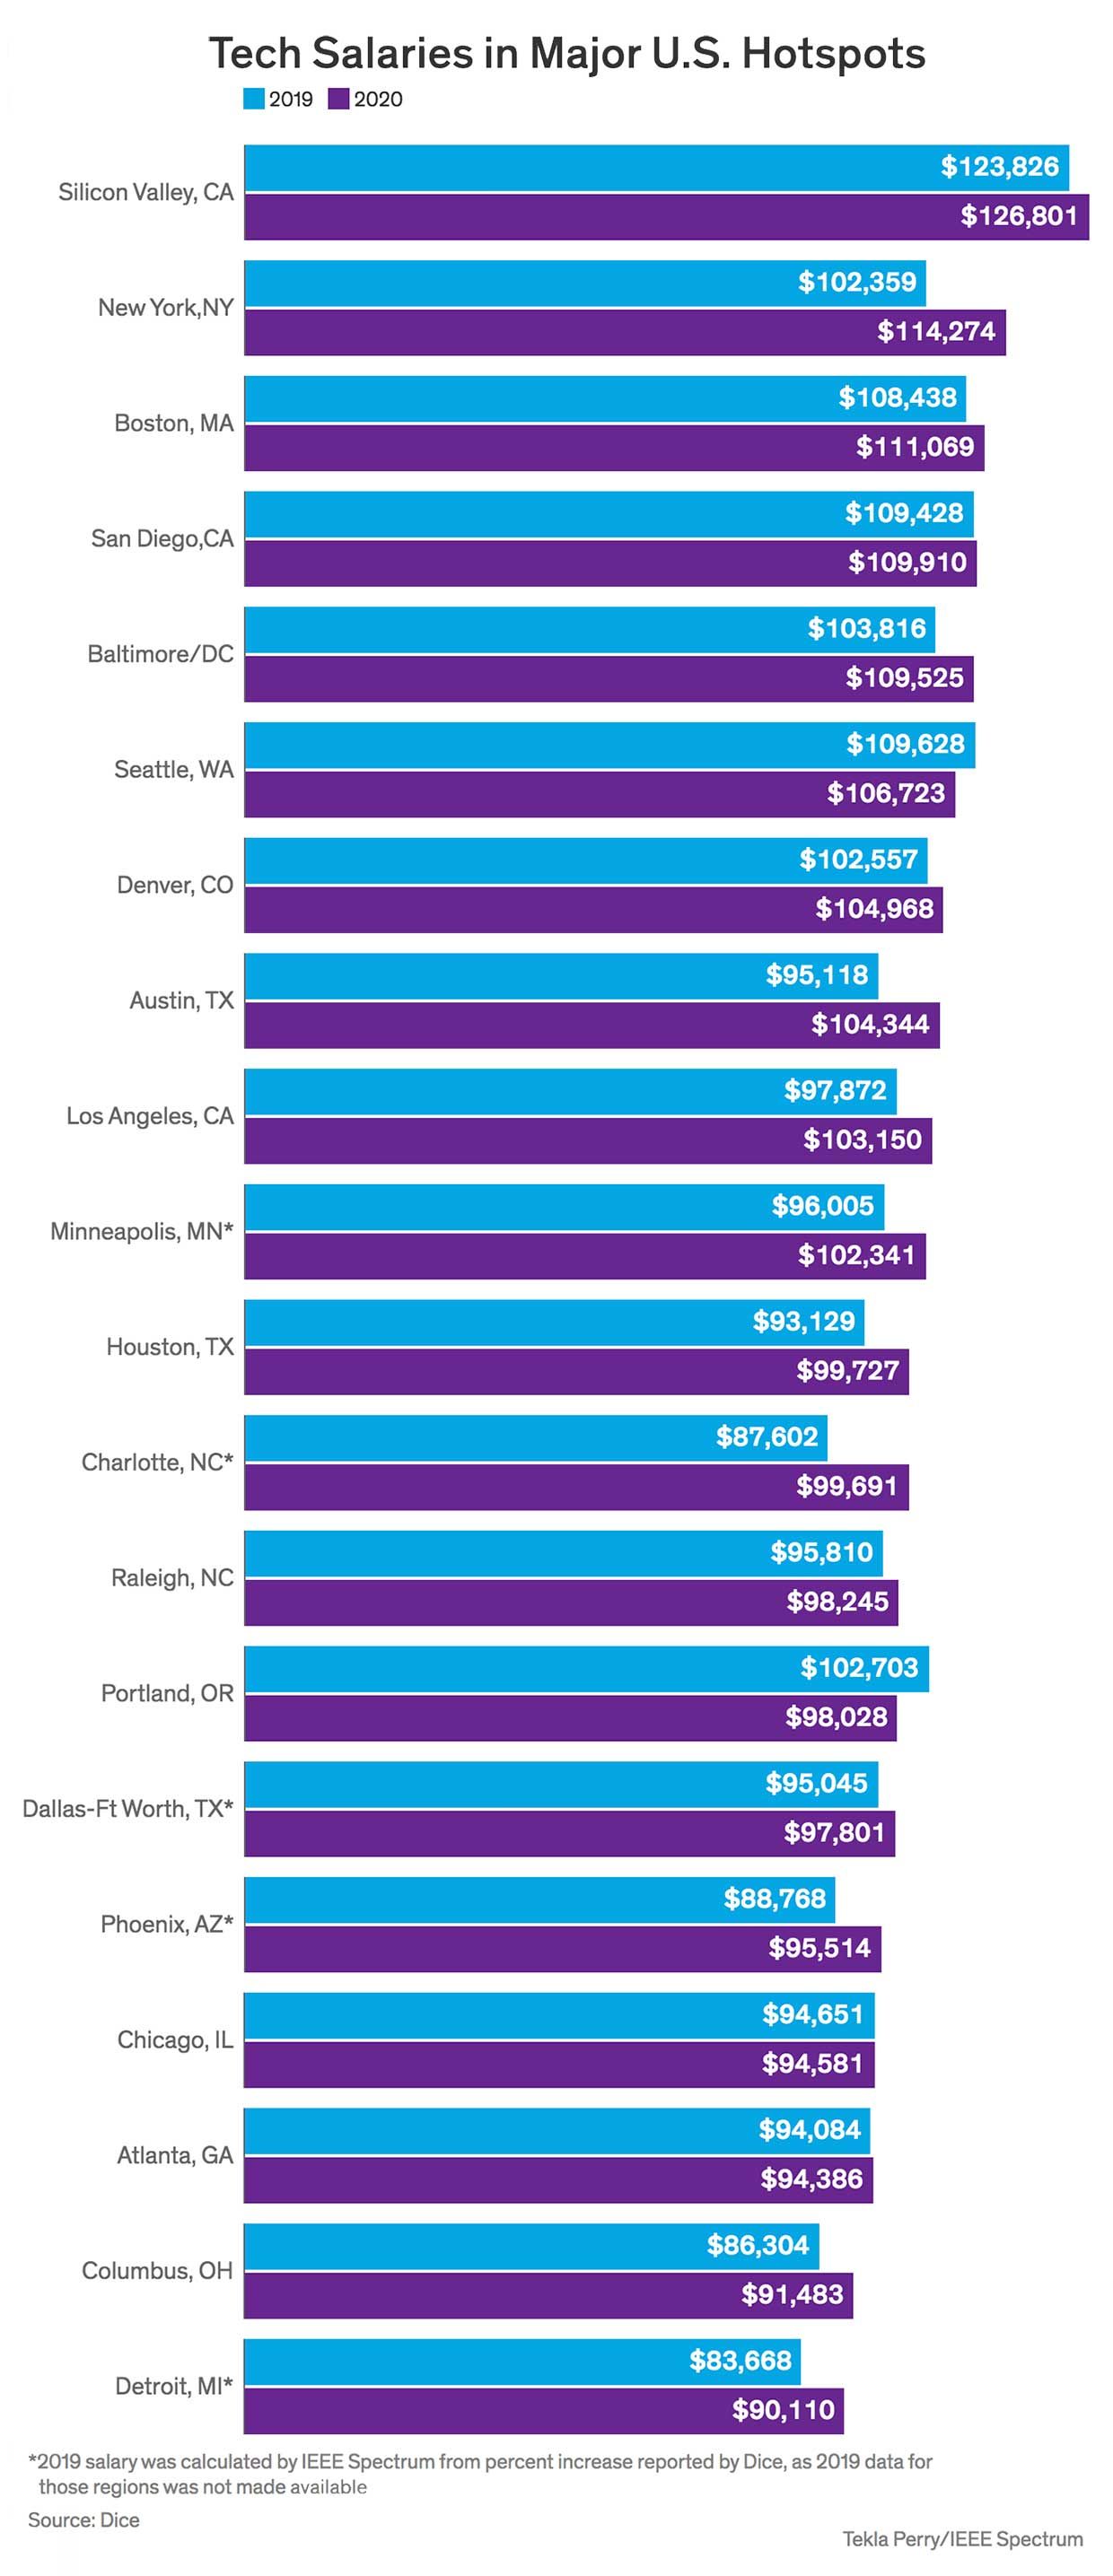 Tech Salary report by major U.S. Cities